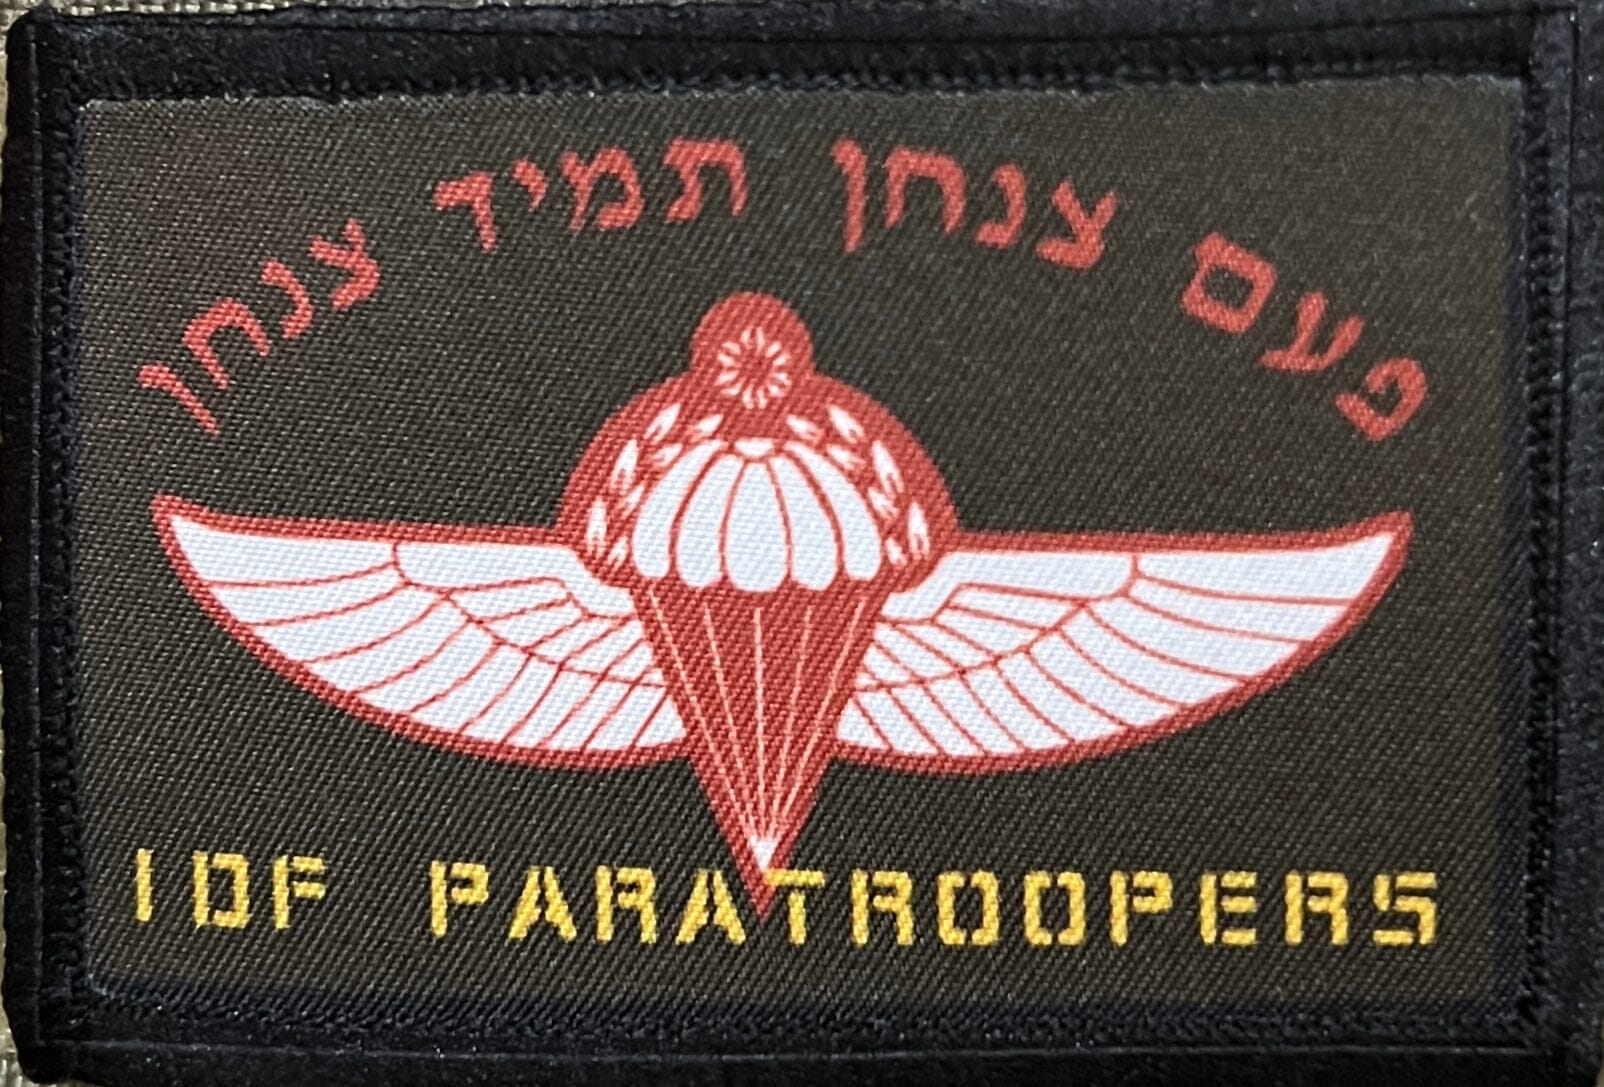 IDF Velcro Belt  Israel Military Products